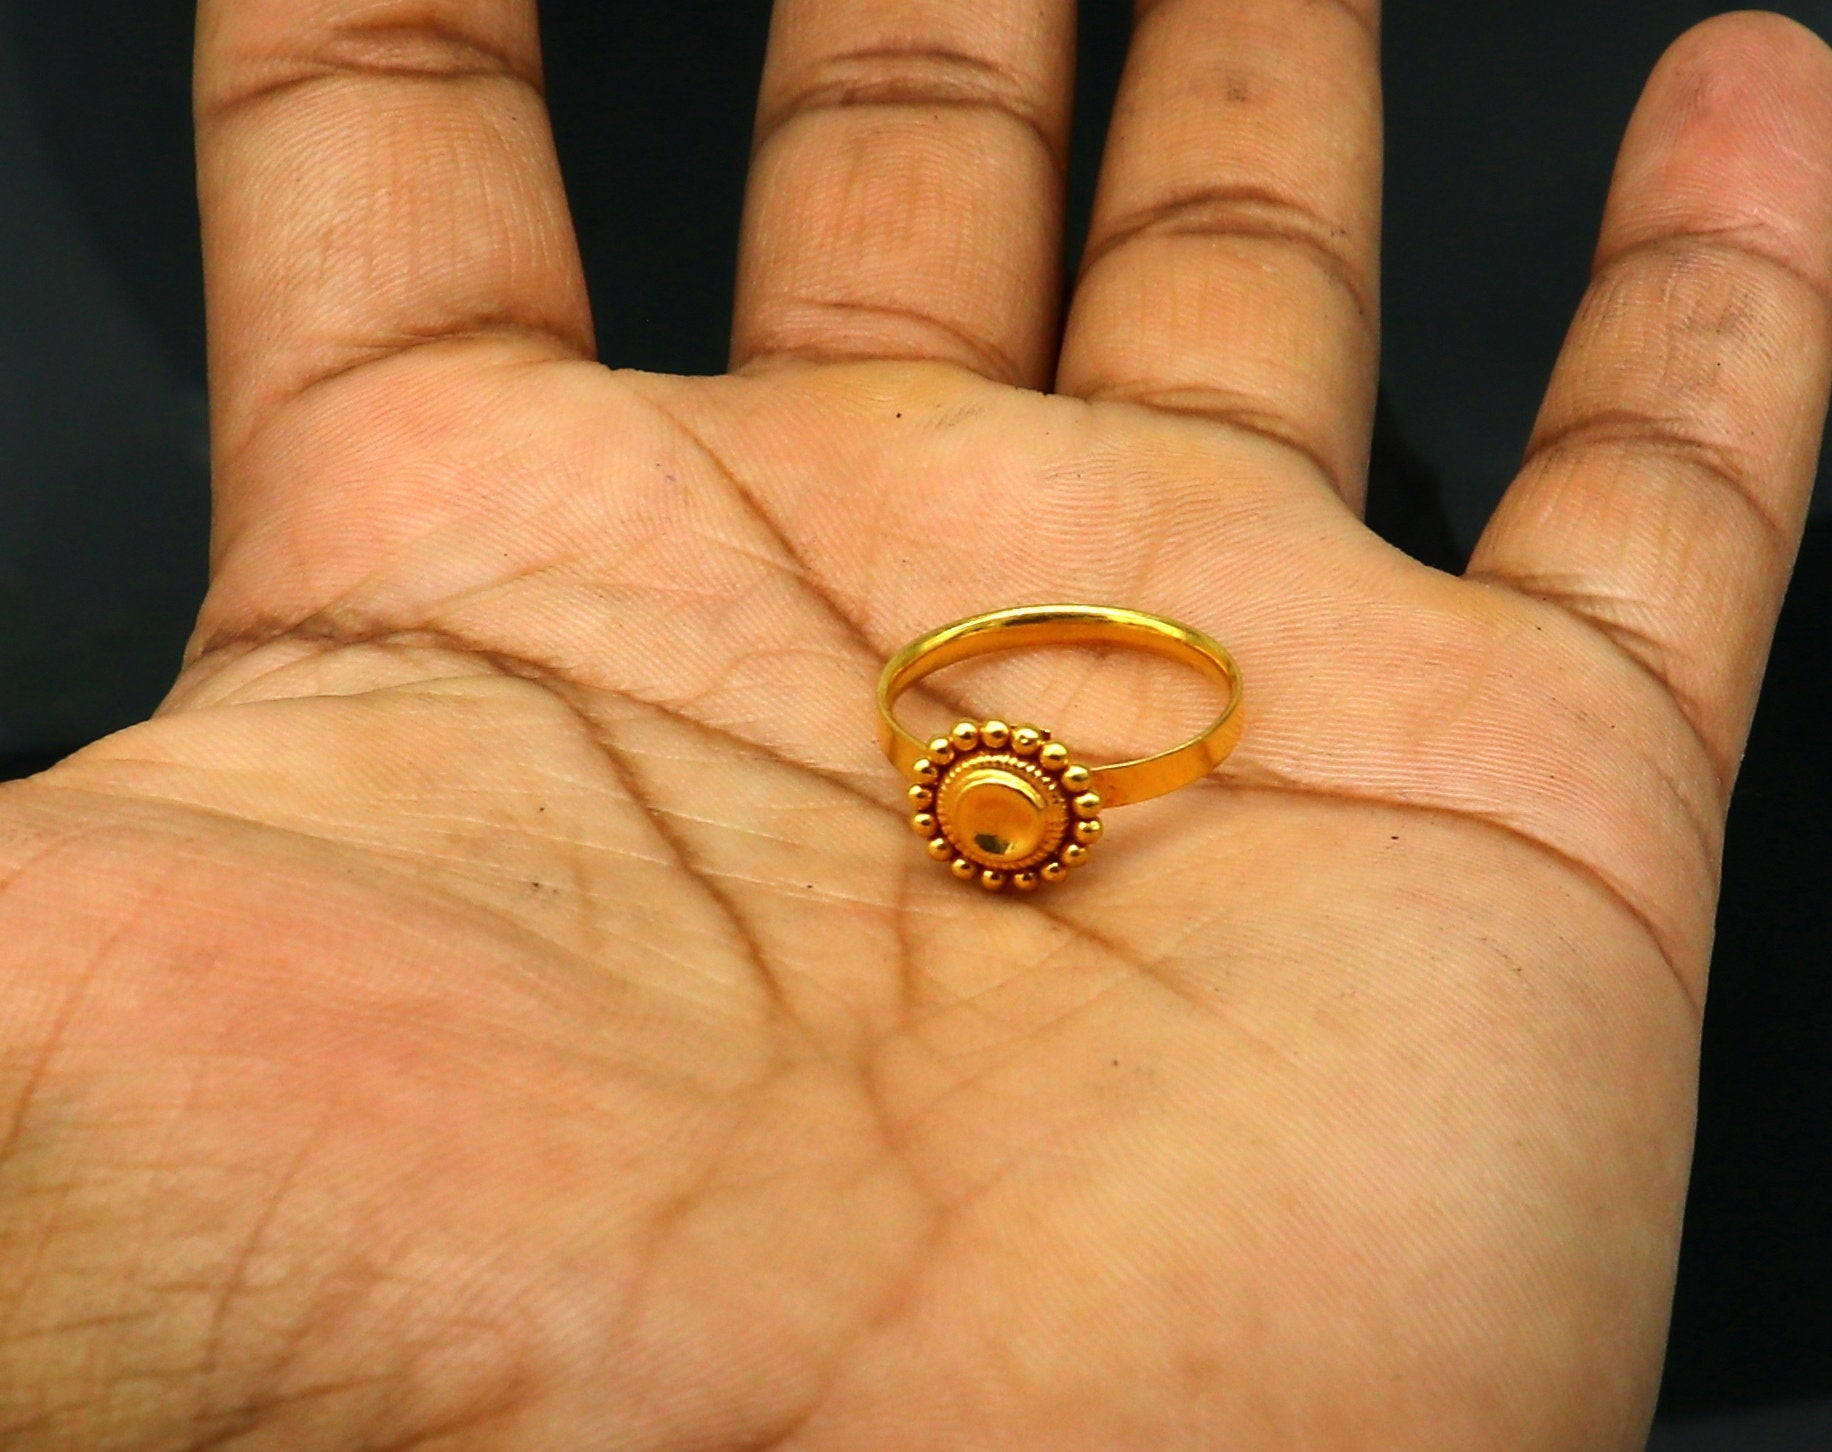 Twin Heart Shape Light Weight Diamond Ring - 10528JJADTX – Jason's The Art  of Jewelry